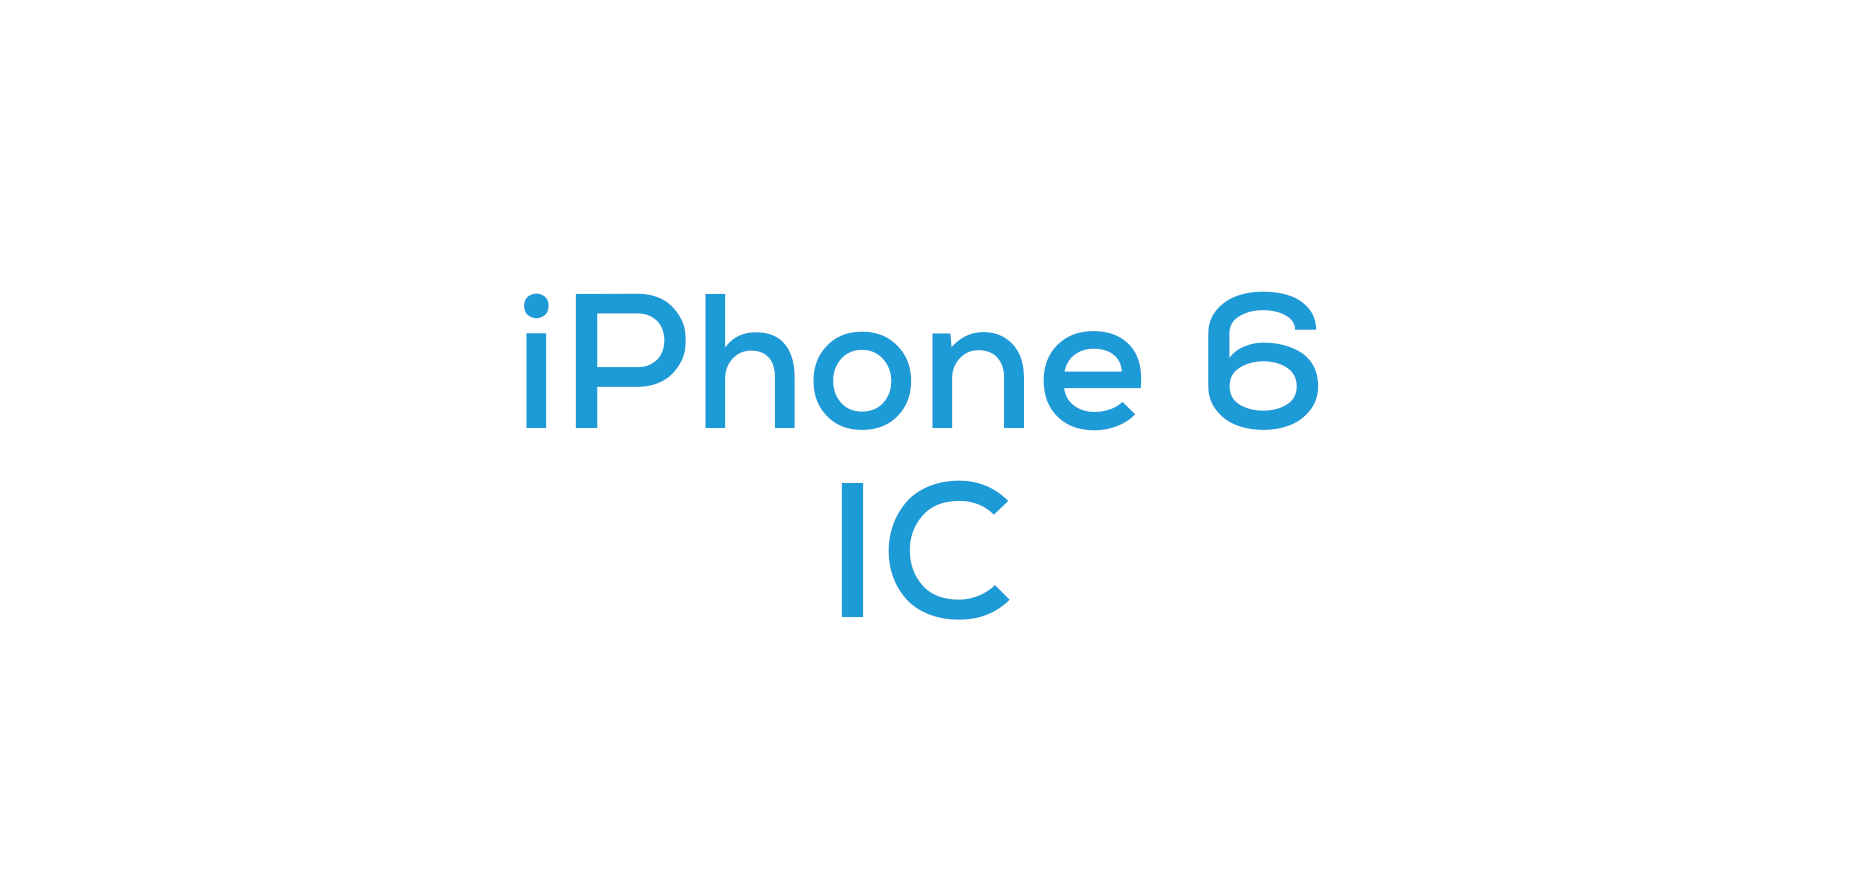 iPhone 6 IC